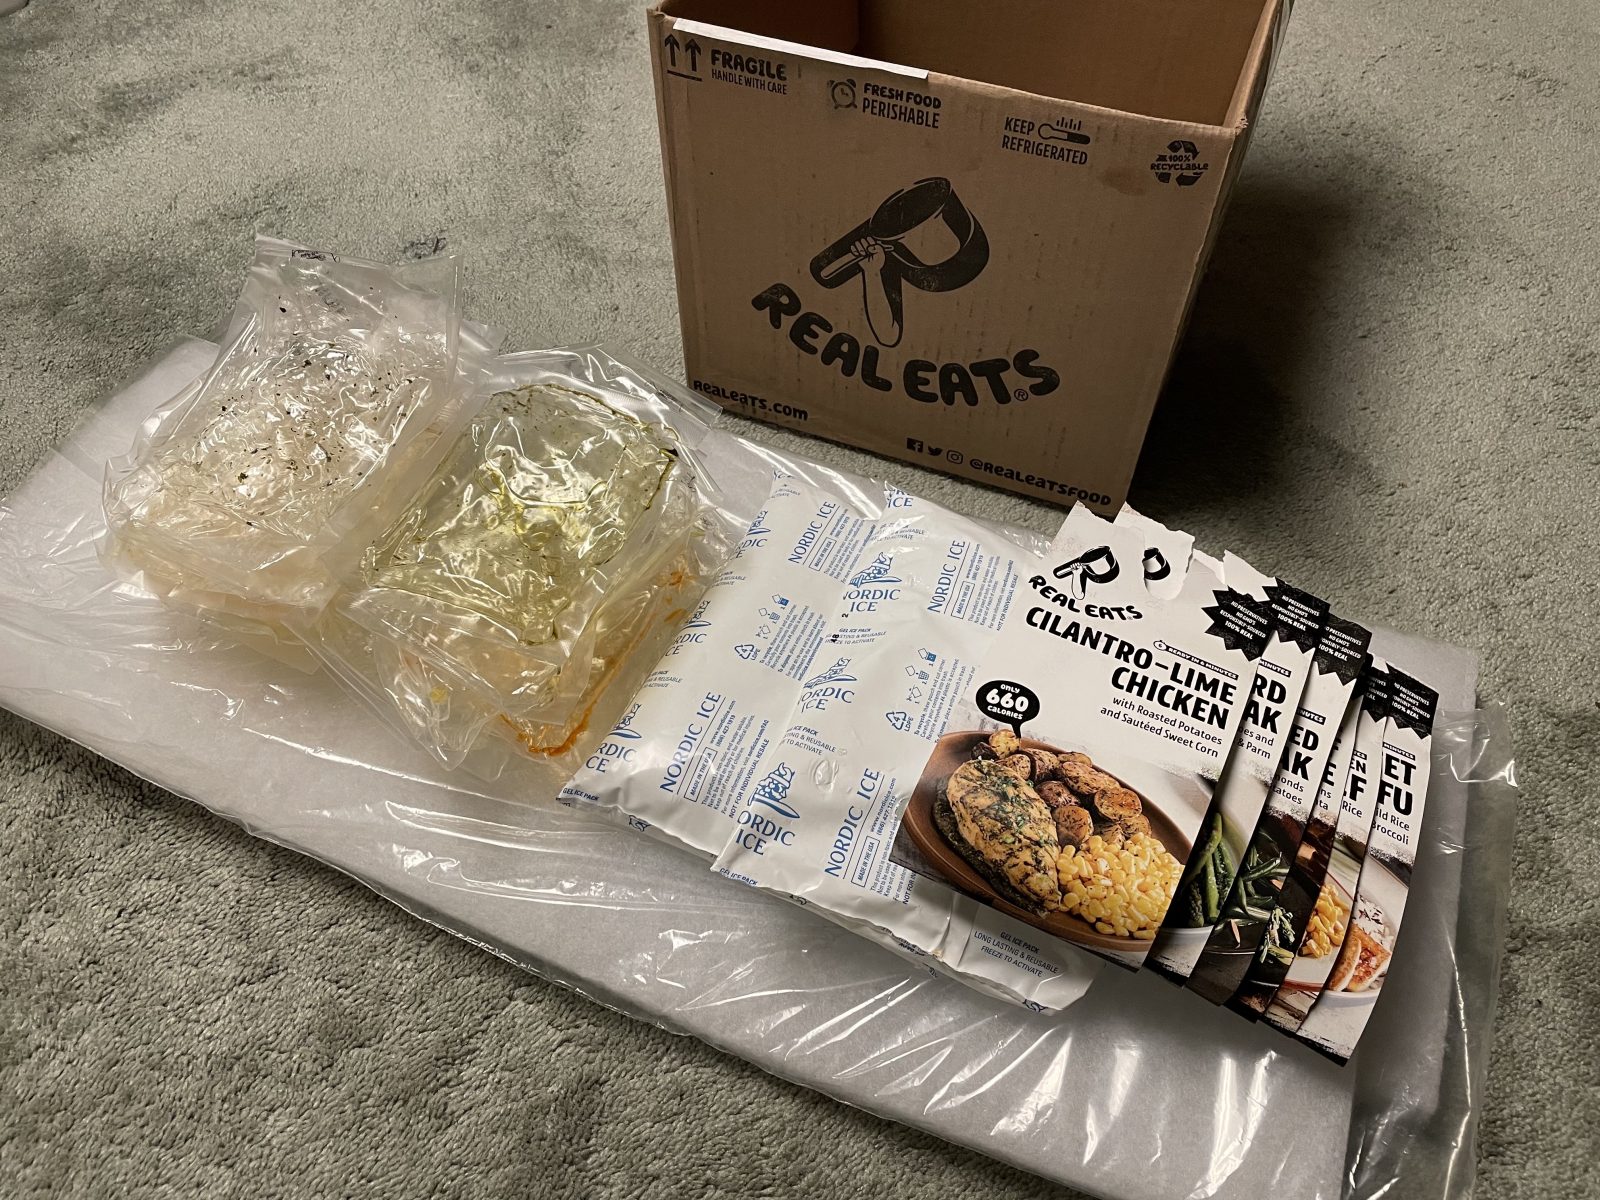 Packaging & Waste – RealEats